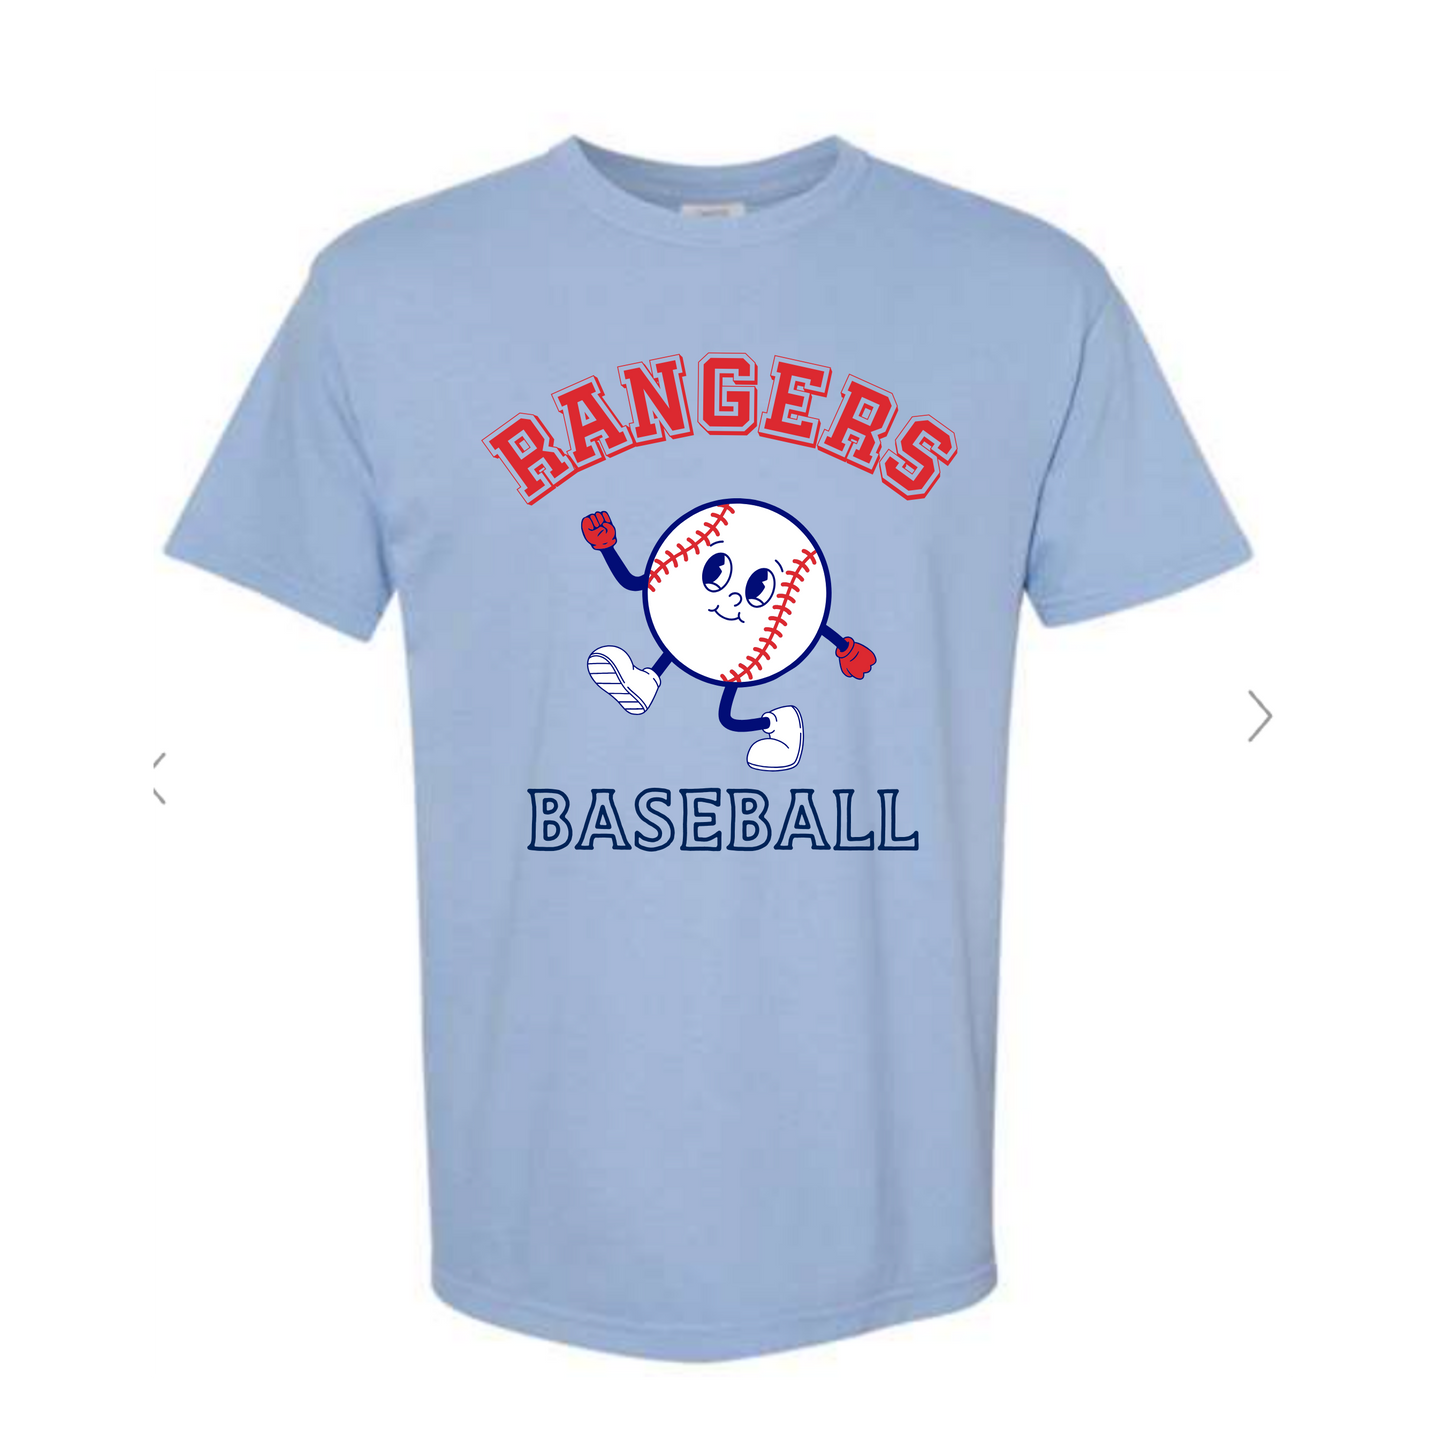 Rangers Baseball Tee